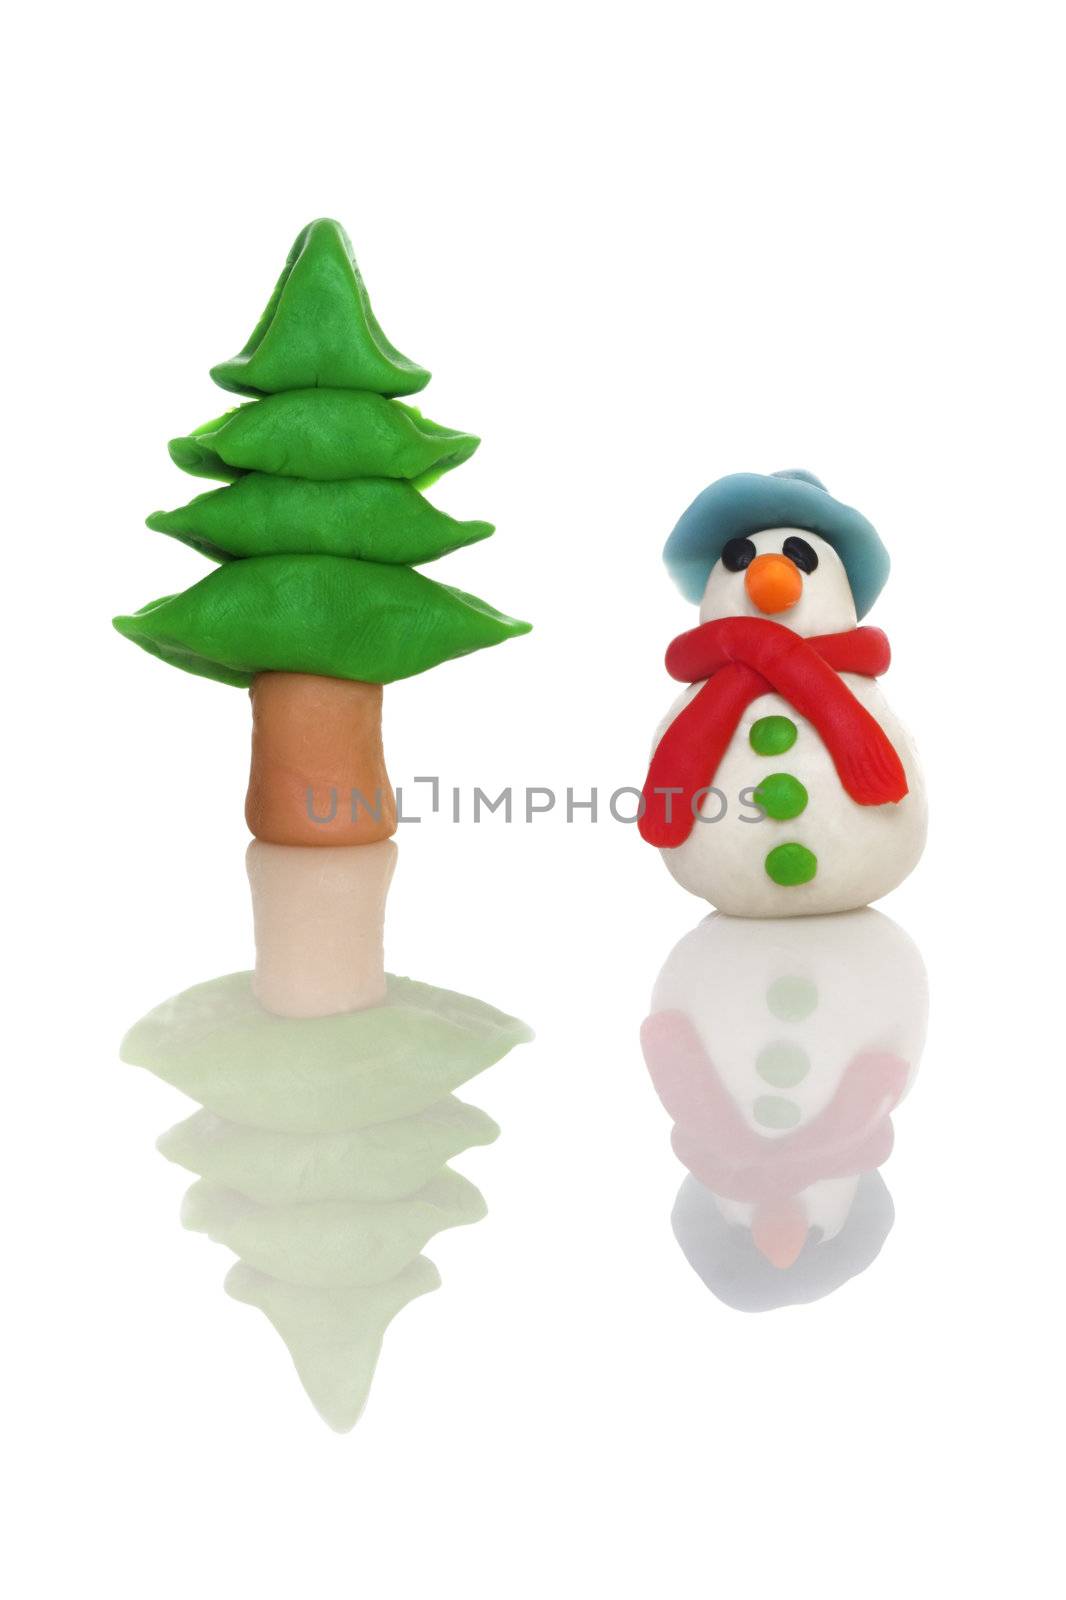 Plasticine snow man by Iko